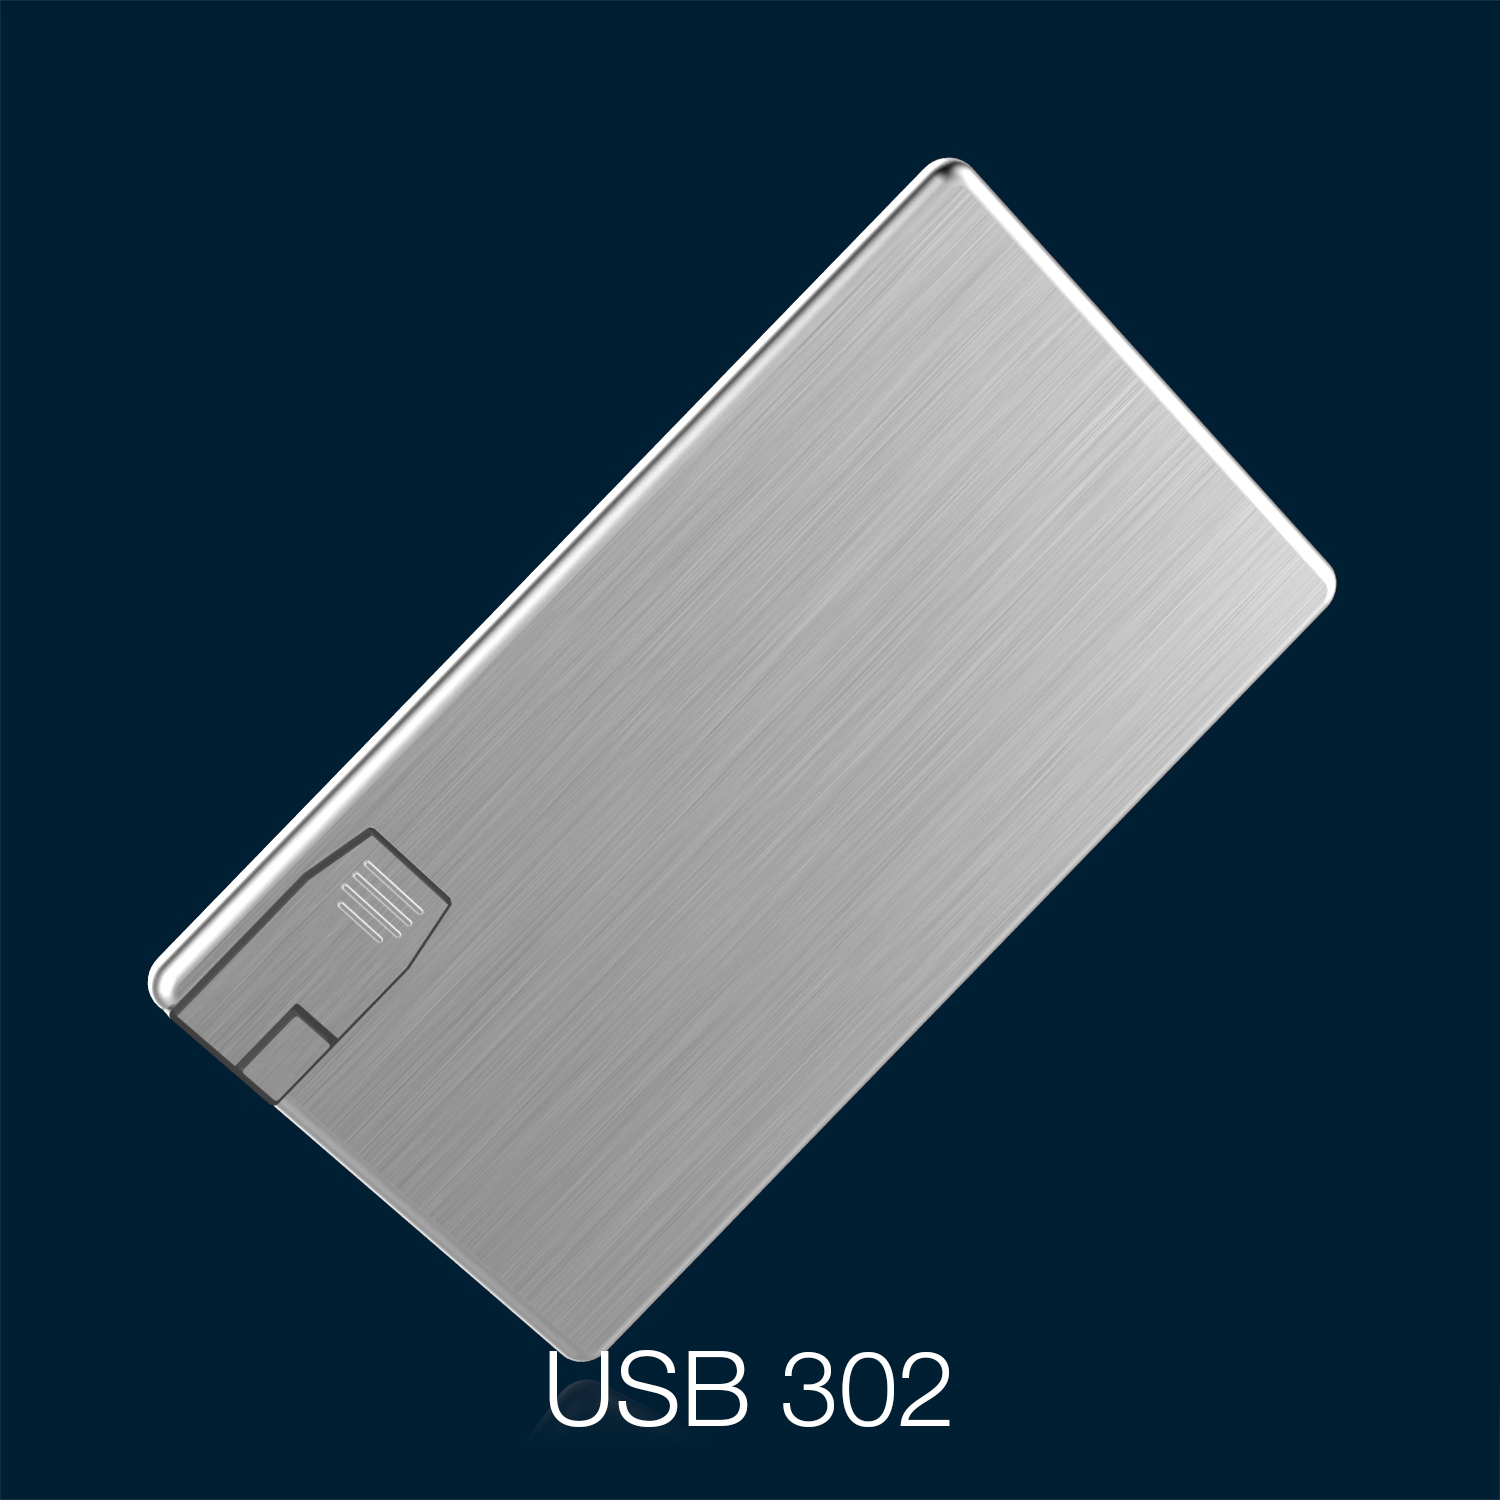 USB 302